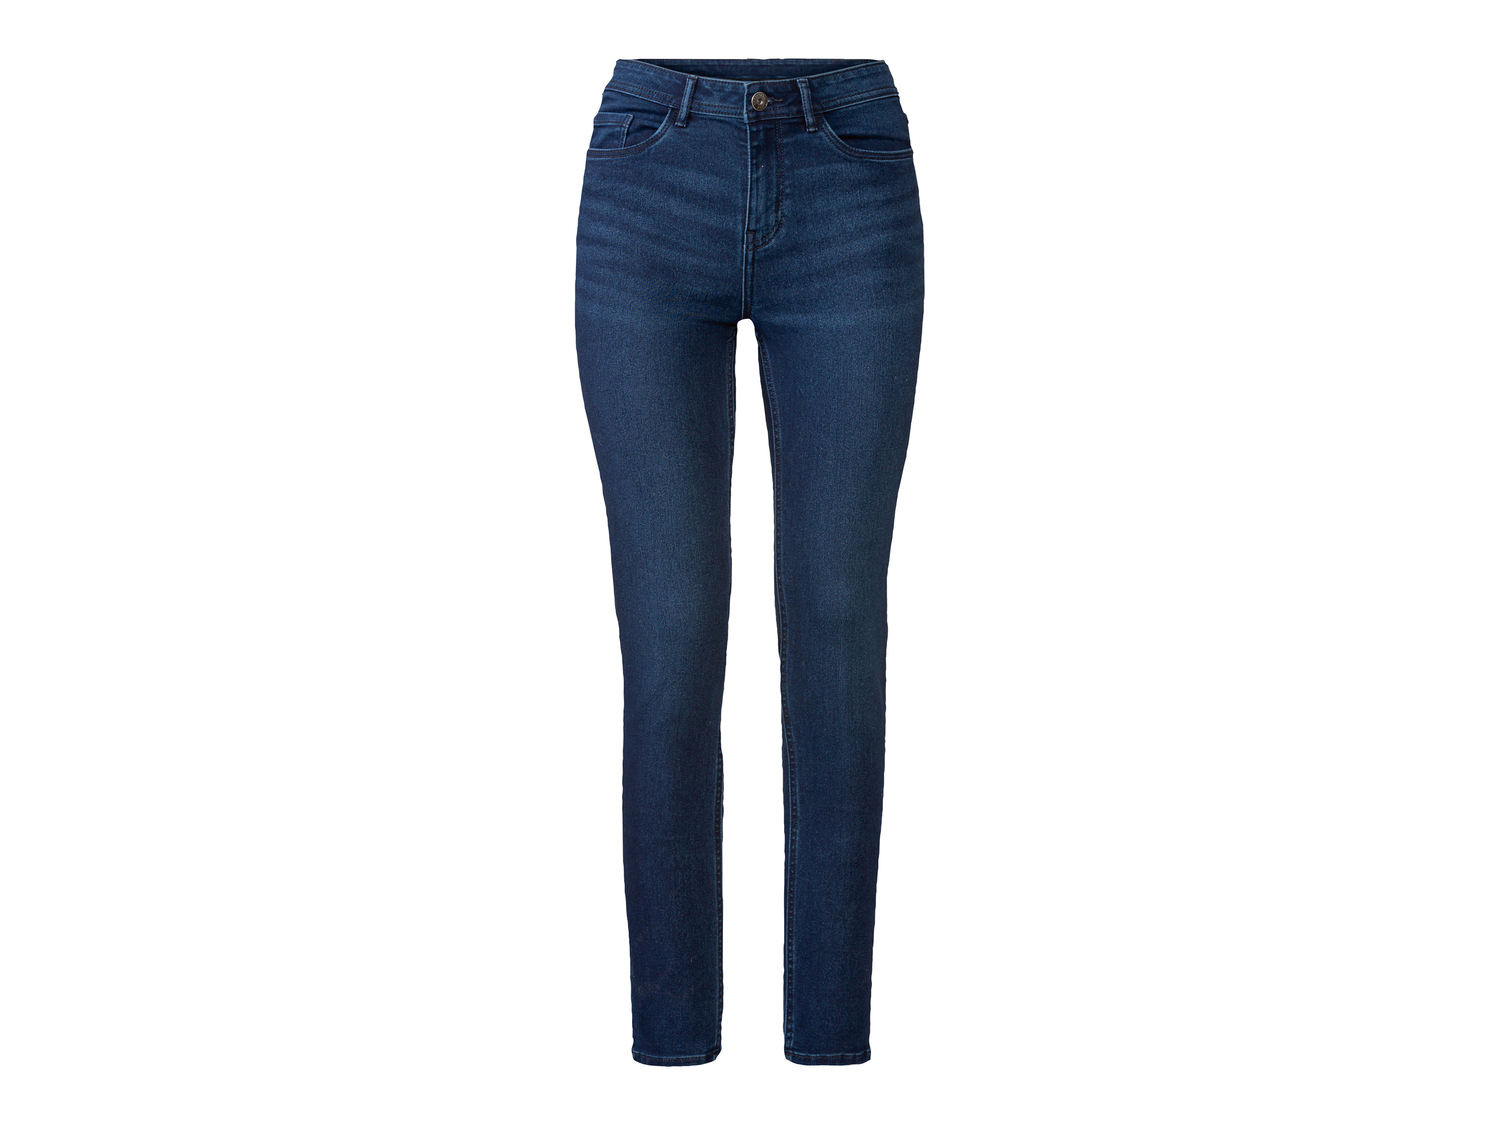 Jeans da donna skinny fit Esmara, prezzo 14.99 &#8364; 
Misure: 38-48
Taglie ...